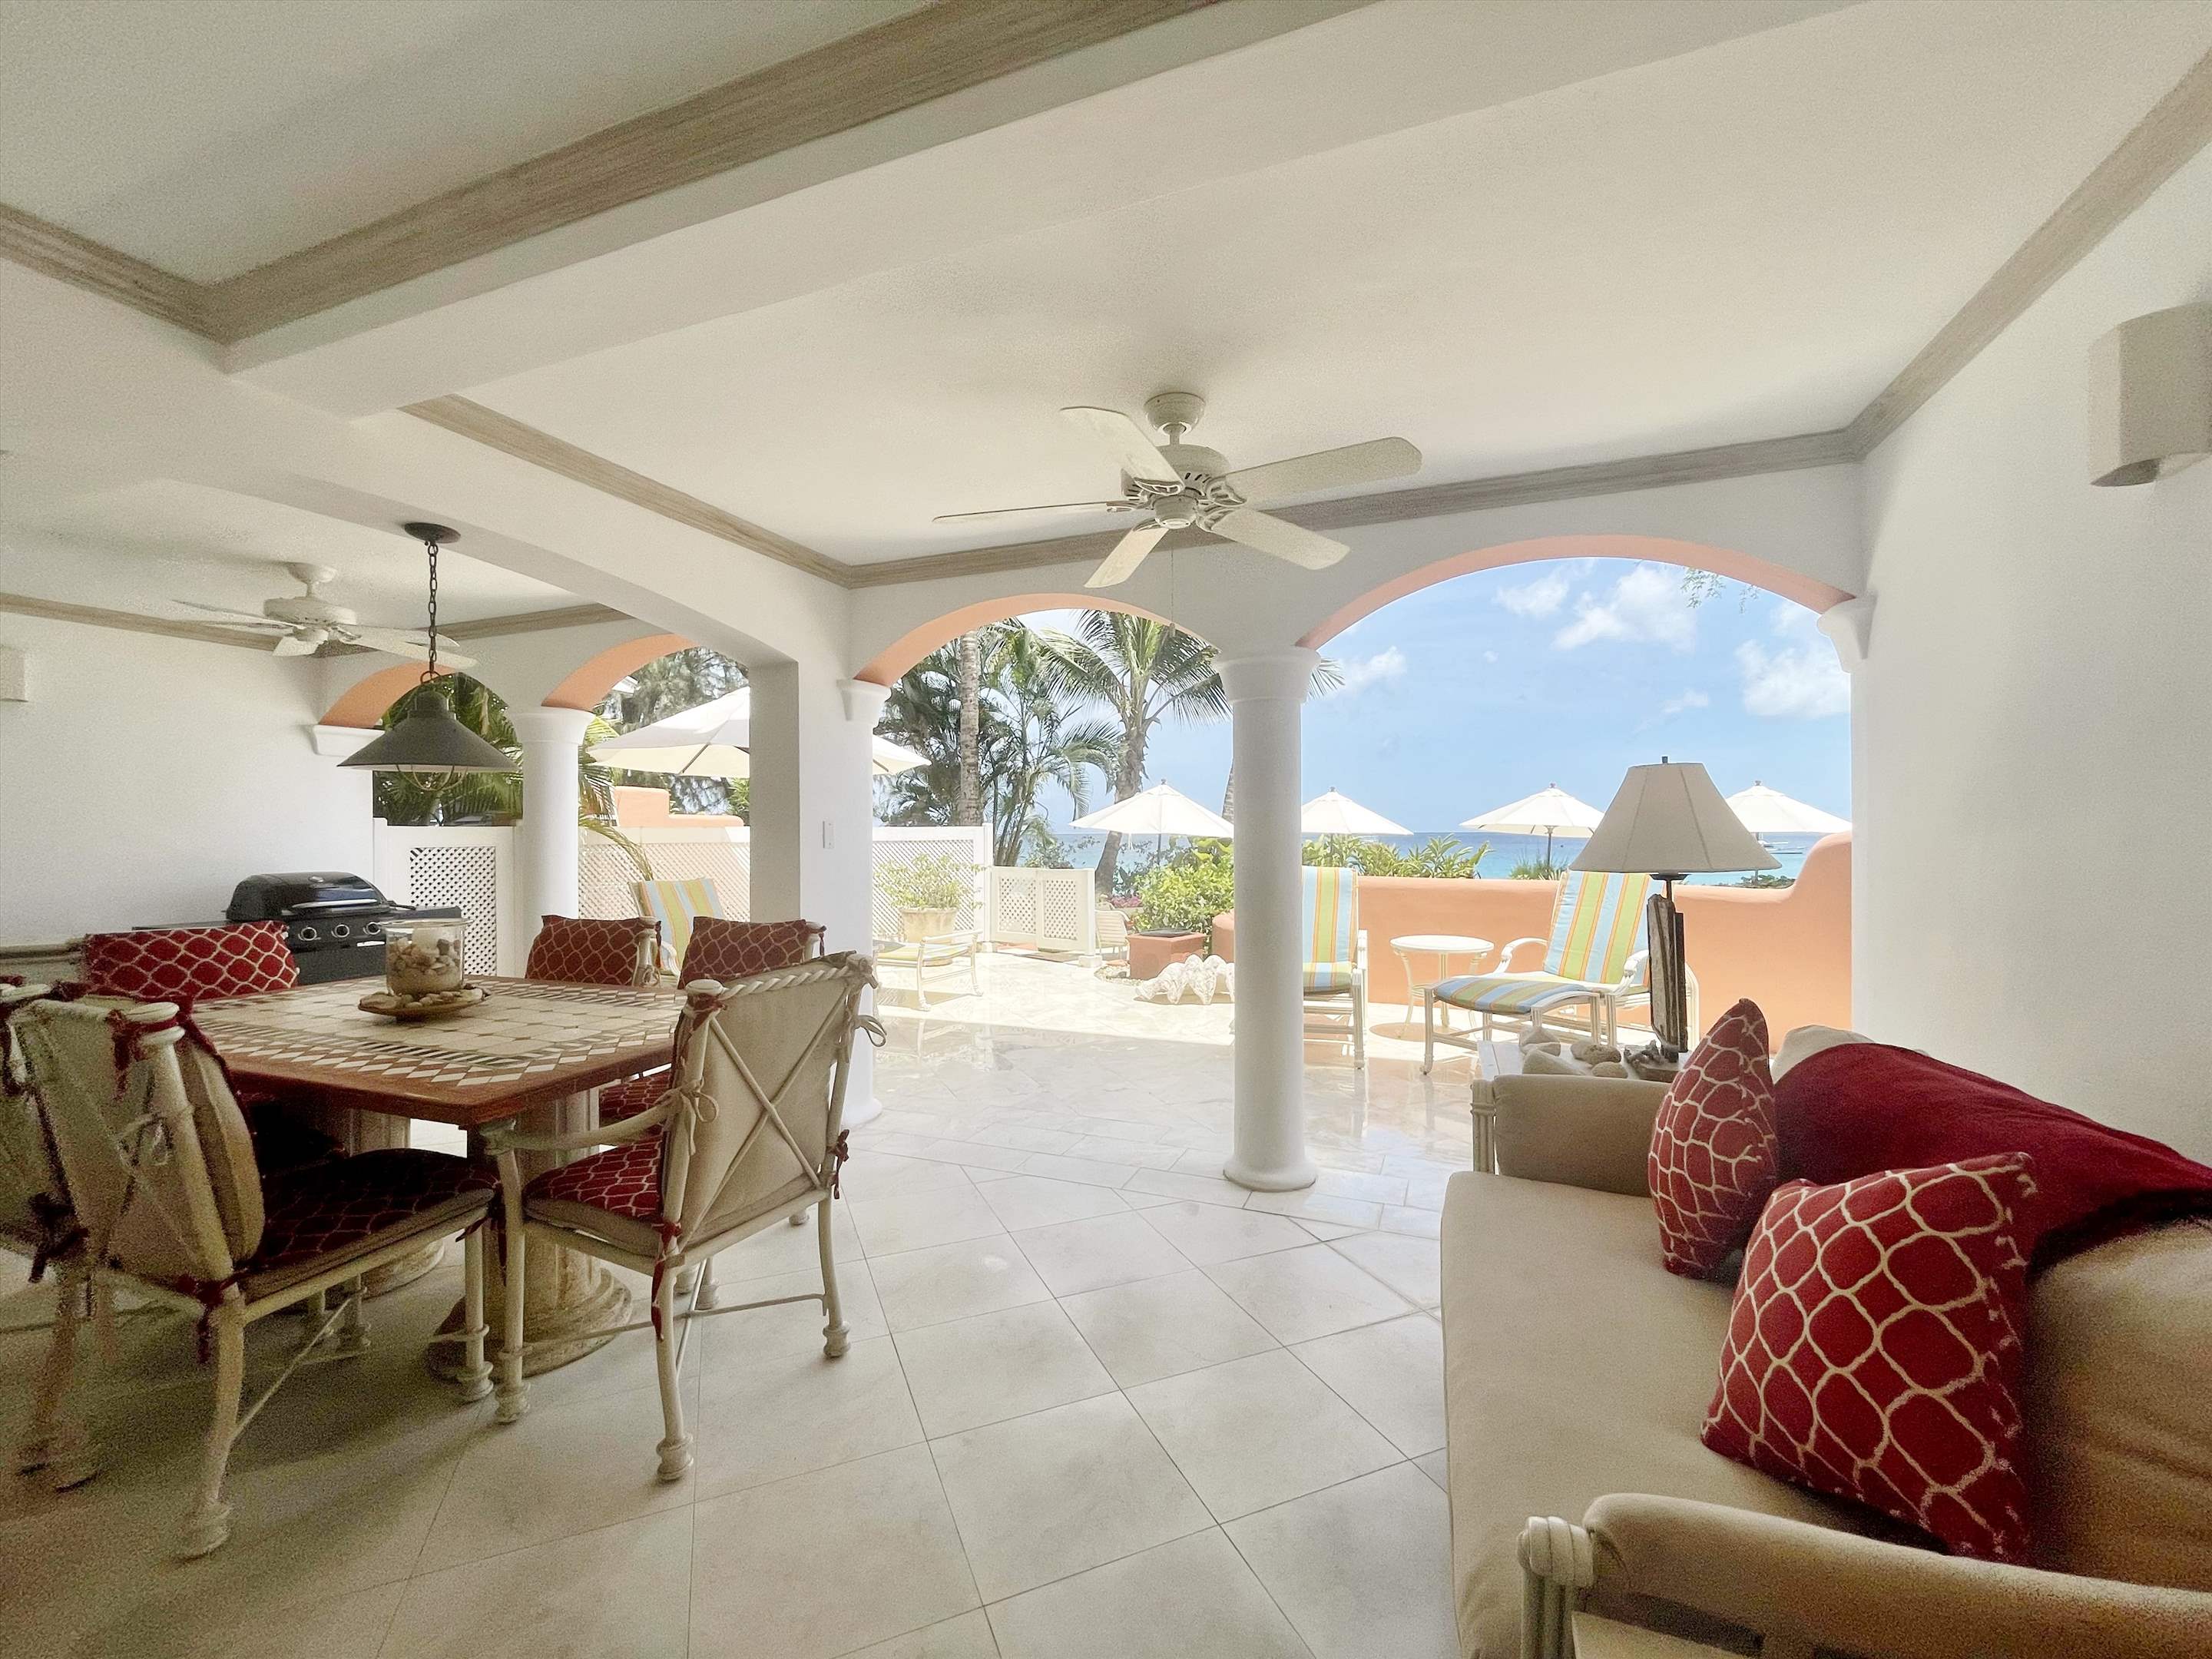 Villas on the Beach 101, 1 bedroom, 1 bedroom apartment in St. James & West Coast, Barbados Photo #9